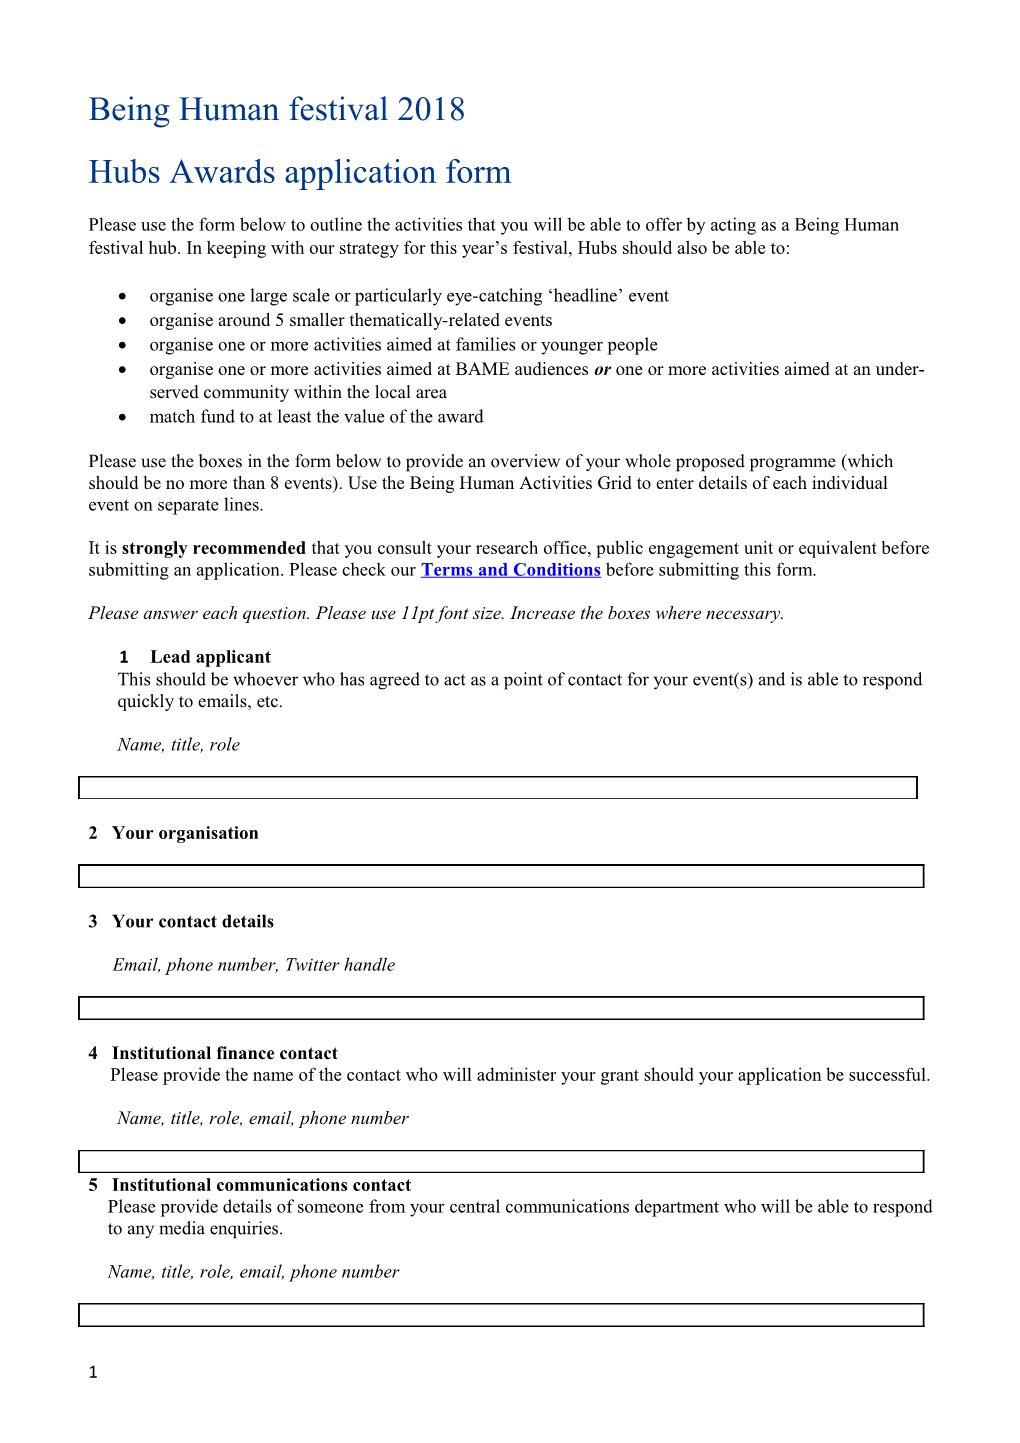 Hubs Awards Application Form